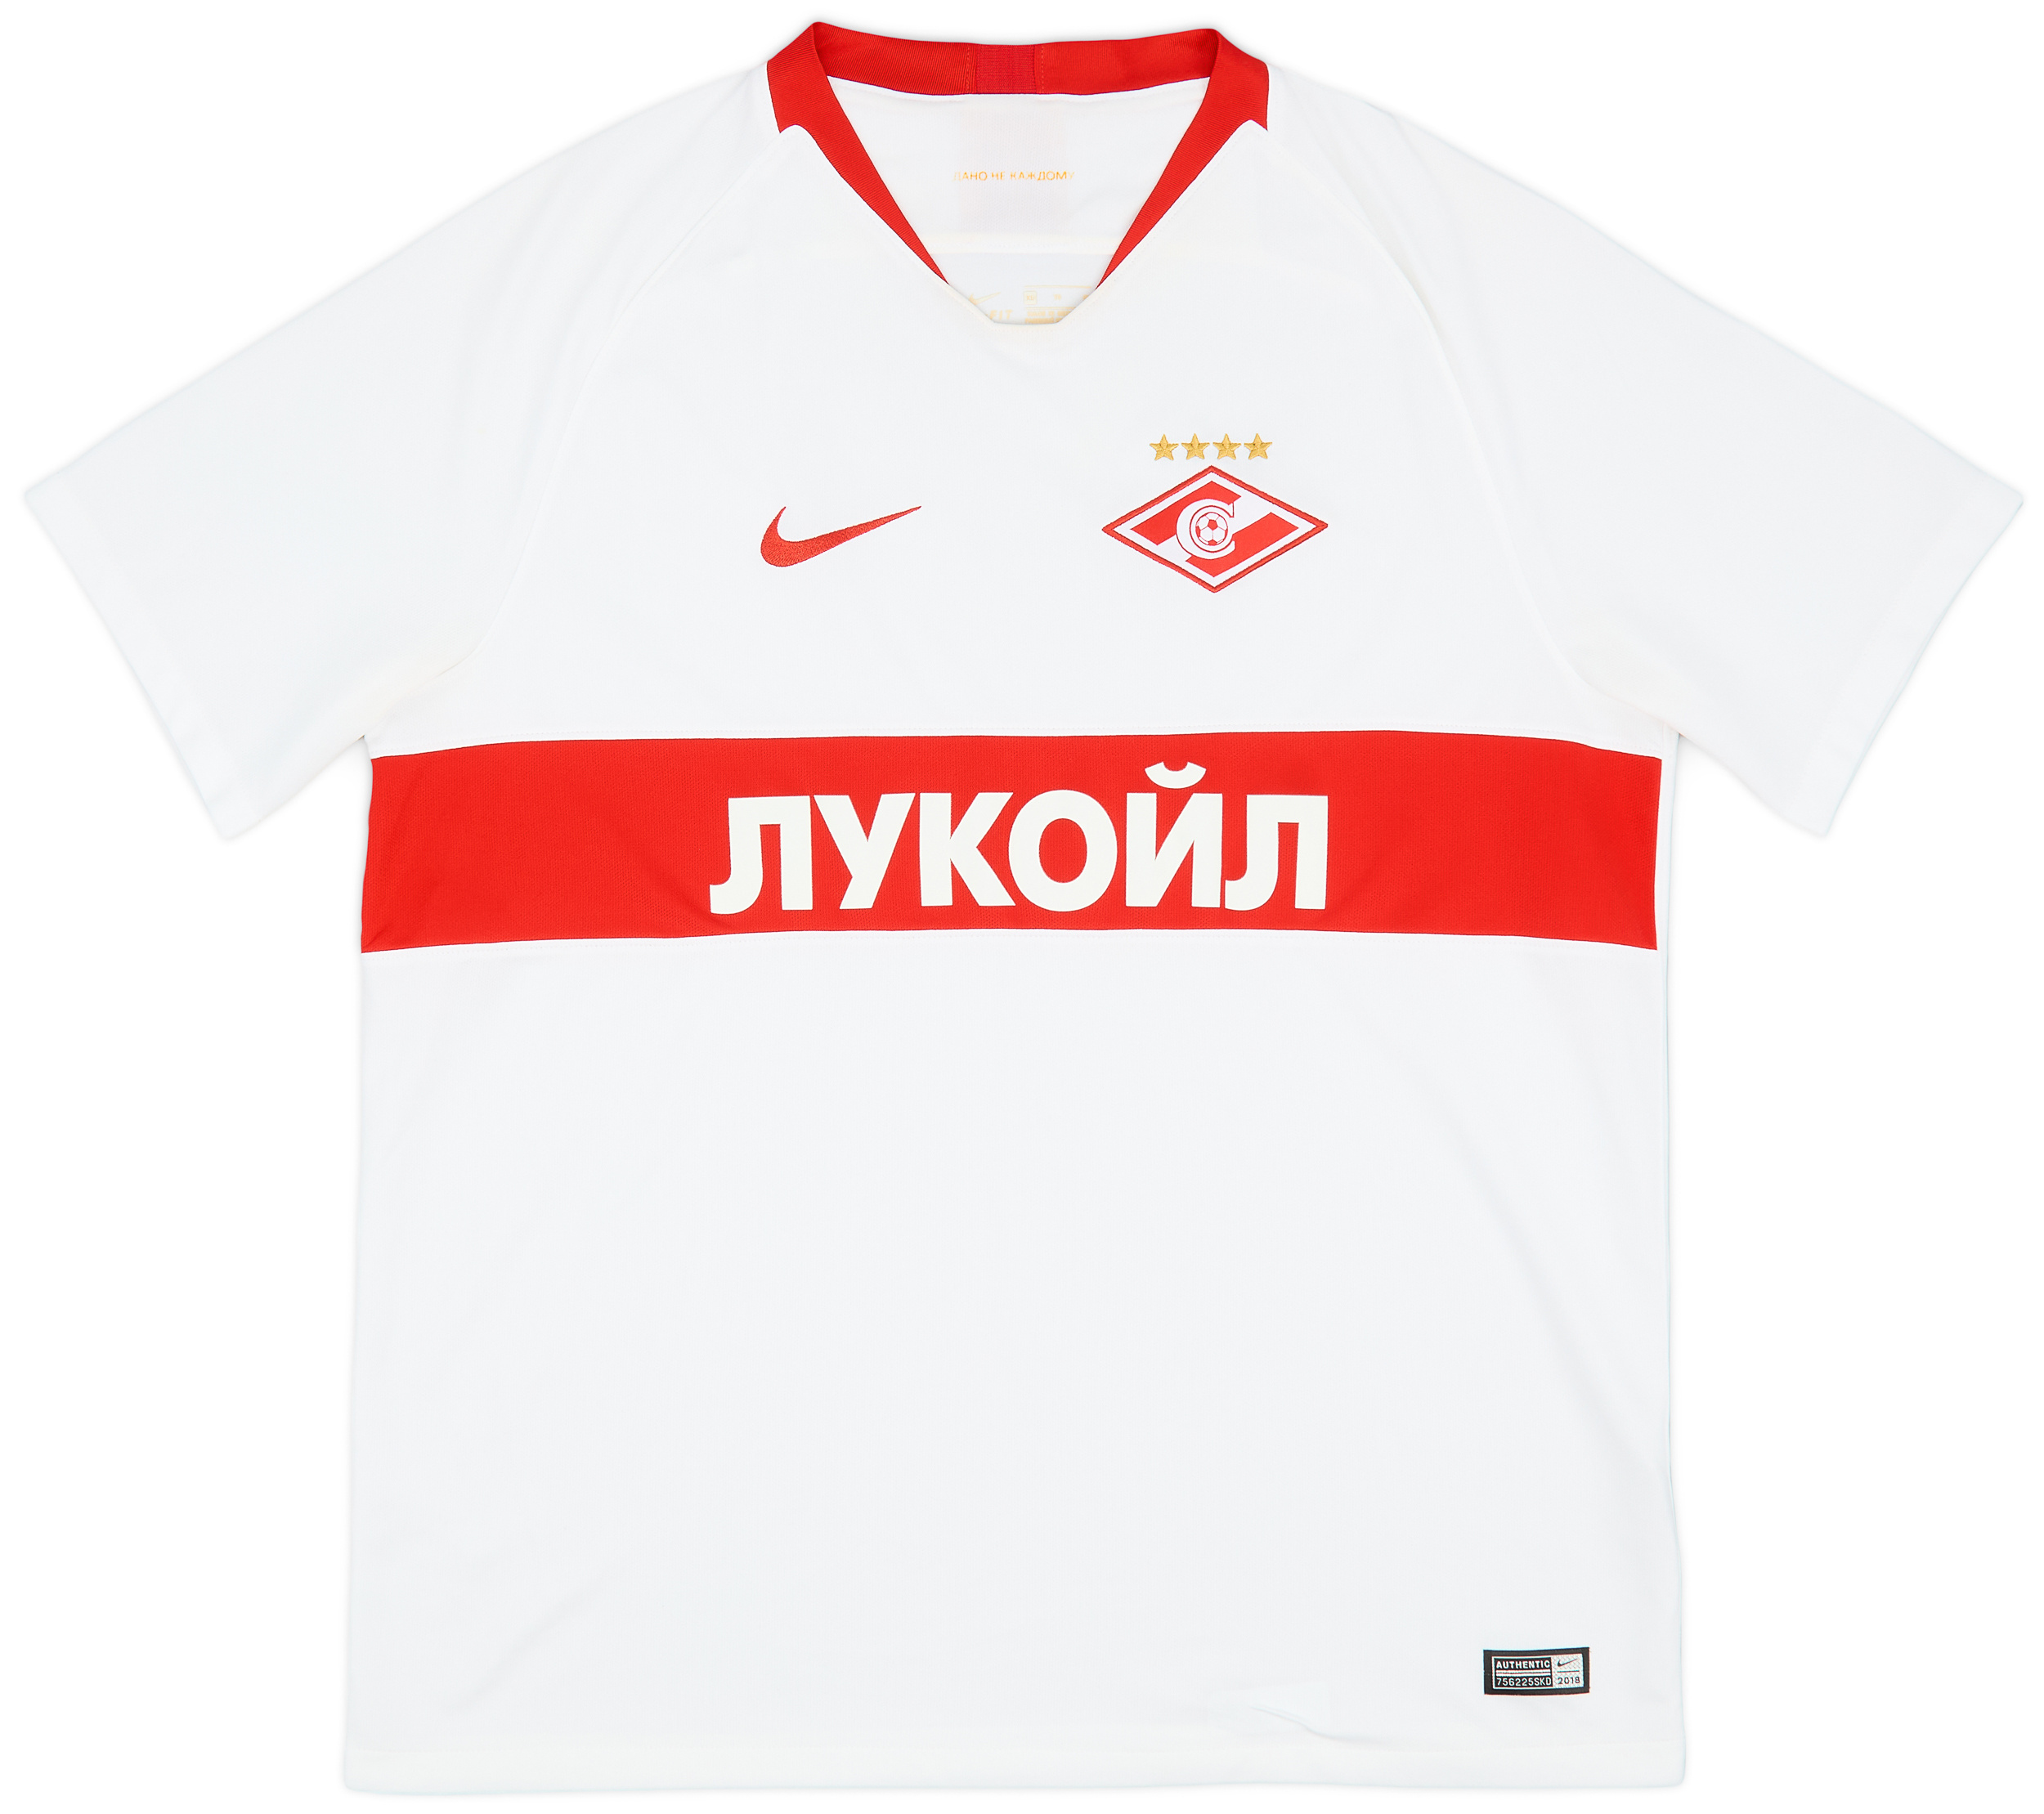 Spartak Moscow  Uit  shirt  (Original)